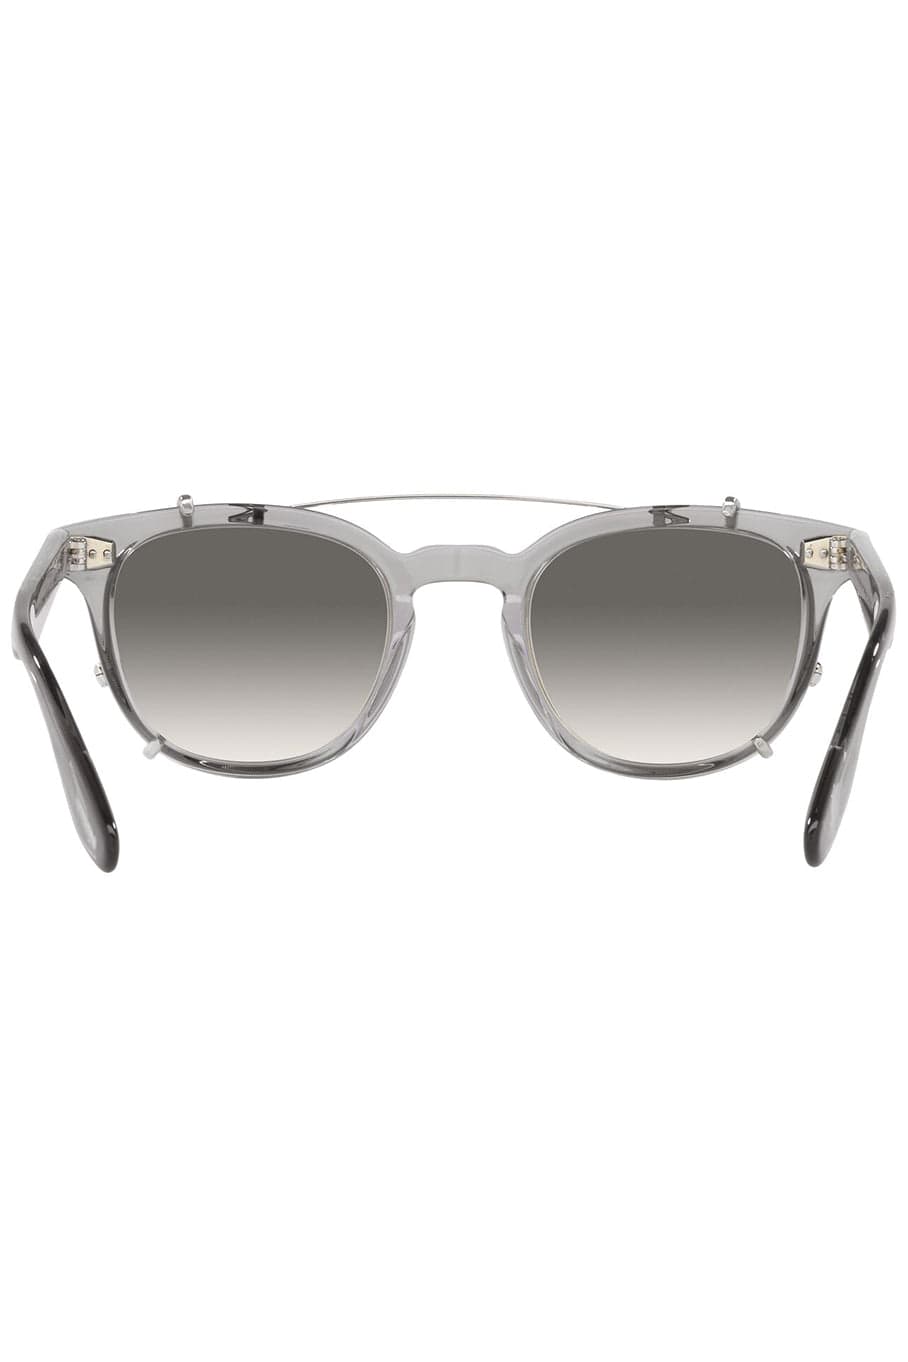 OLIVER PEOPLES-Jep Sunglasses - Grey-GREY